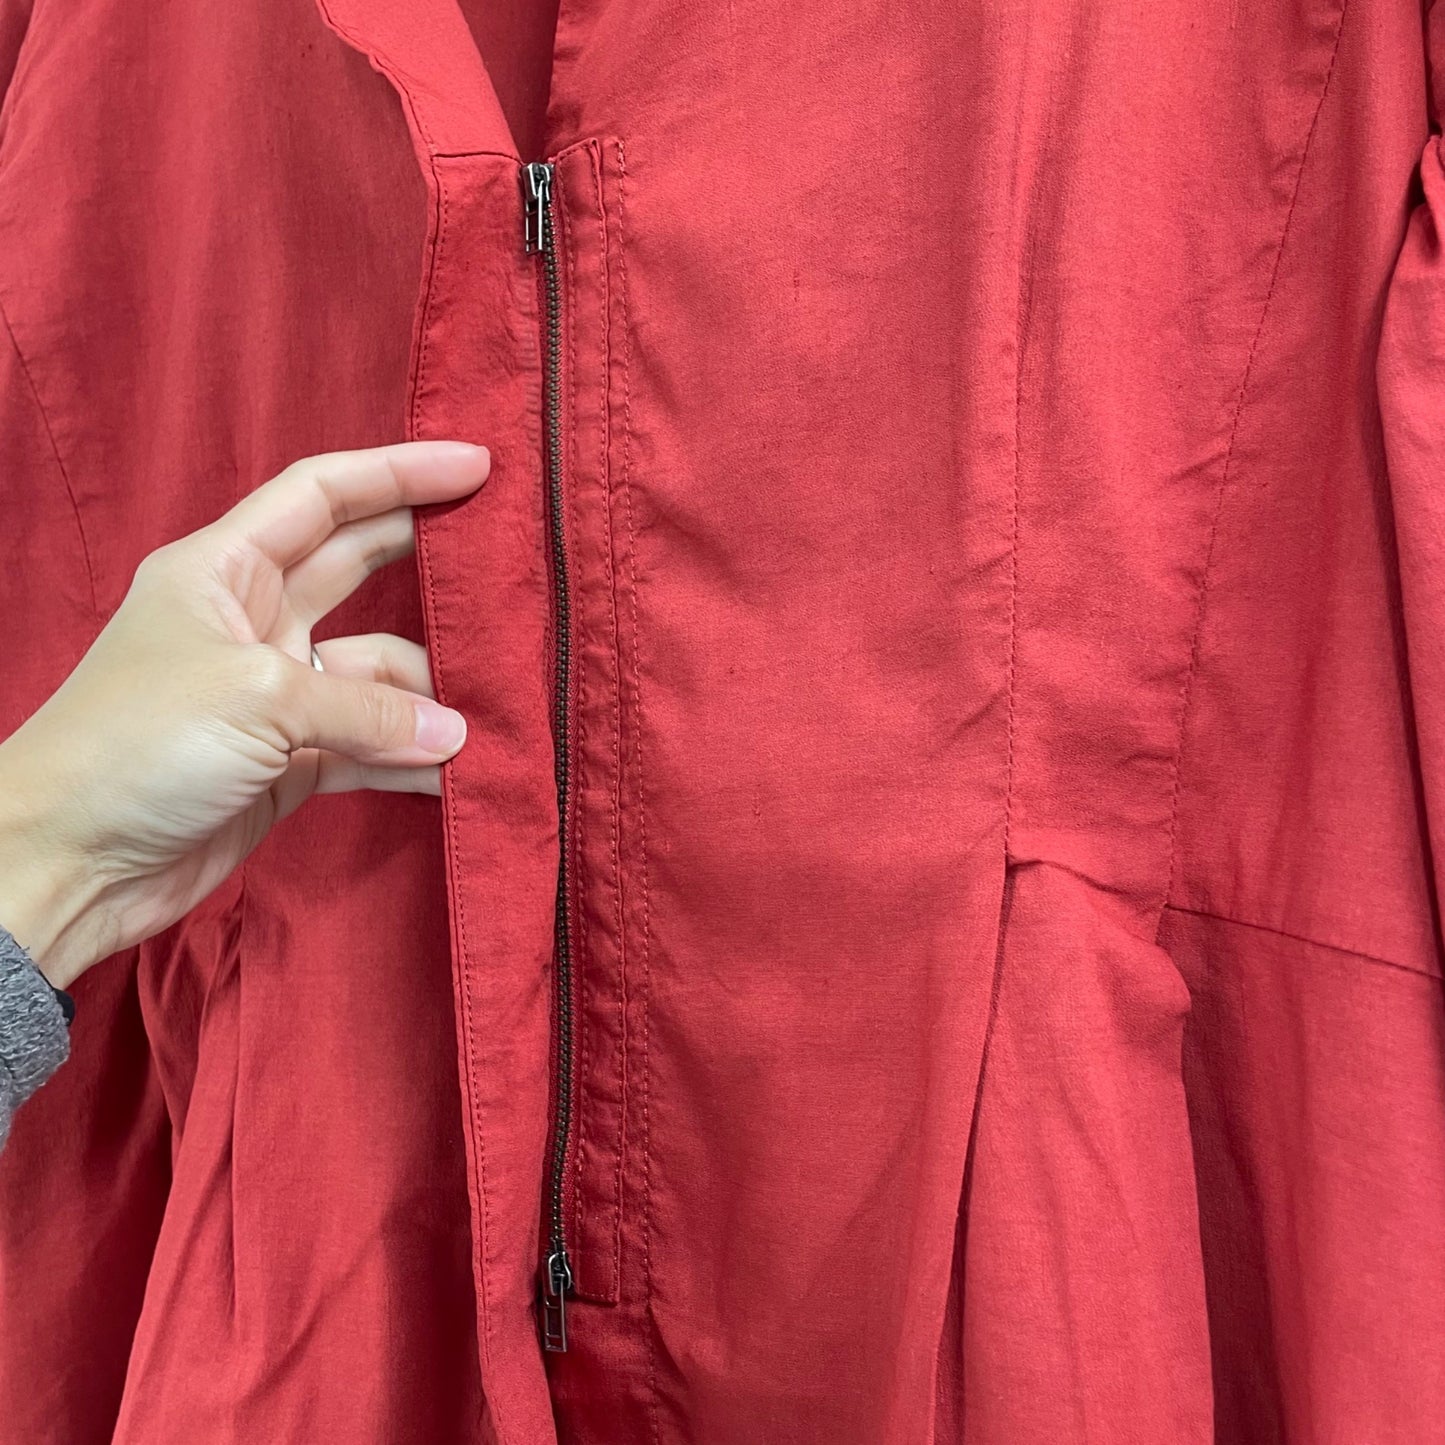 Eileen Fisher Red Linen Blend Front Zip Lightweight Jacket Womens Size Large